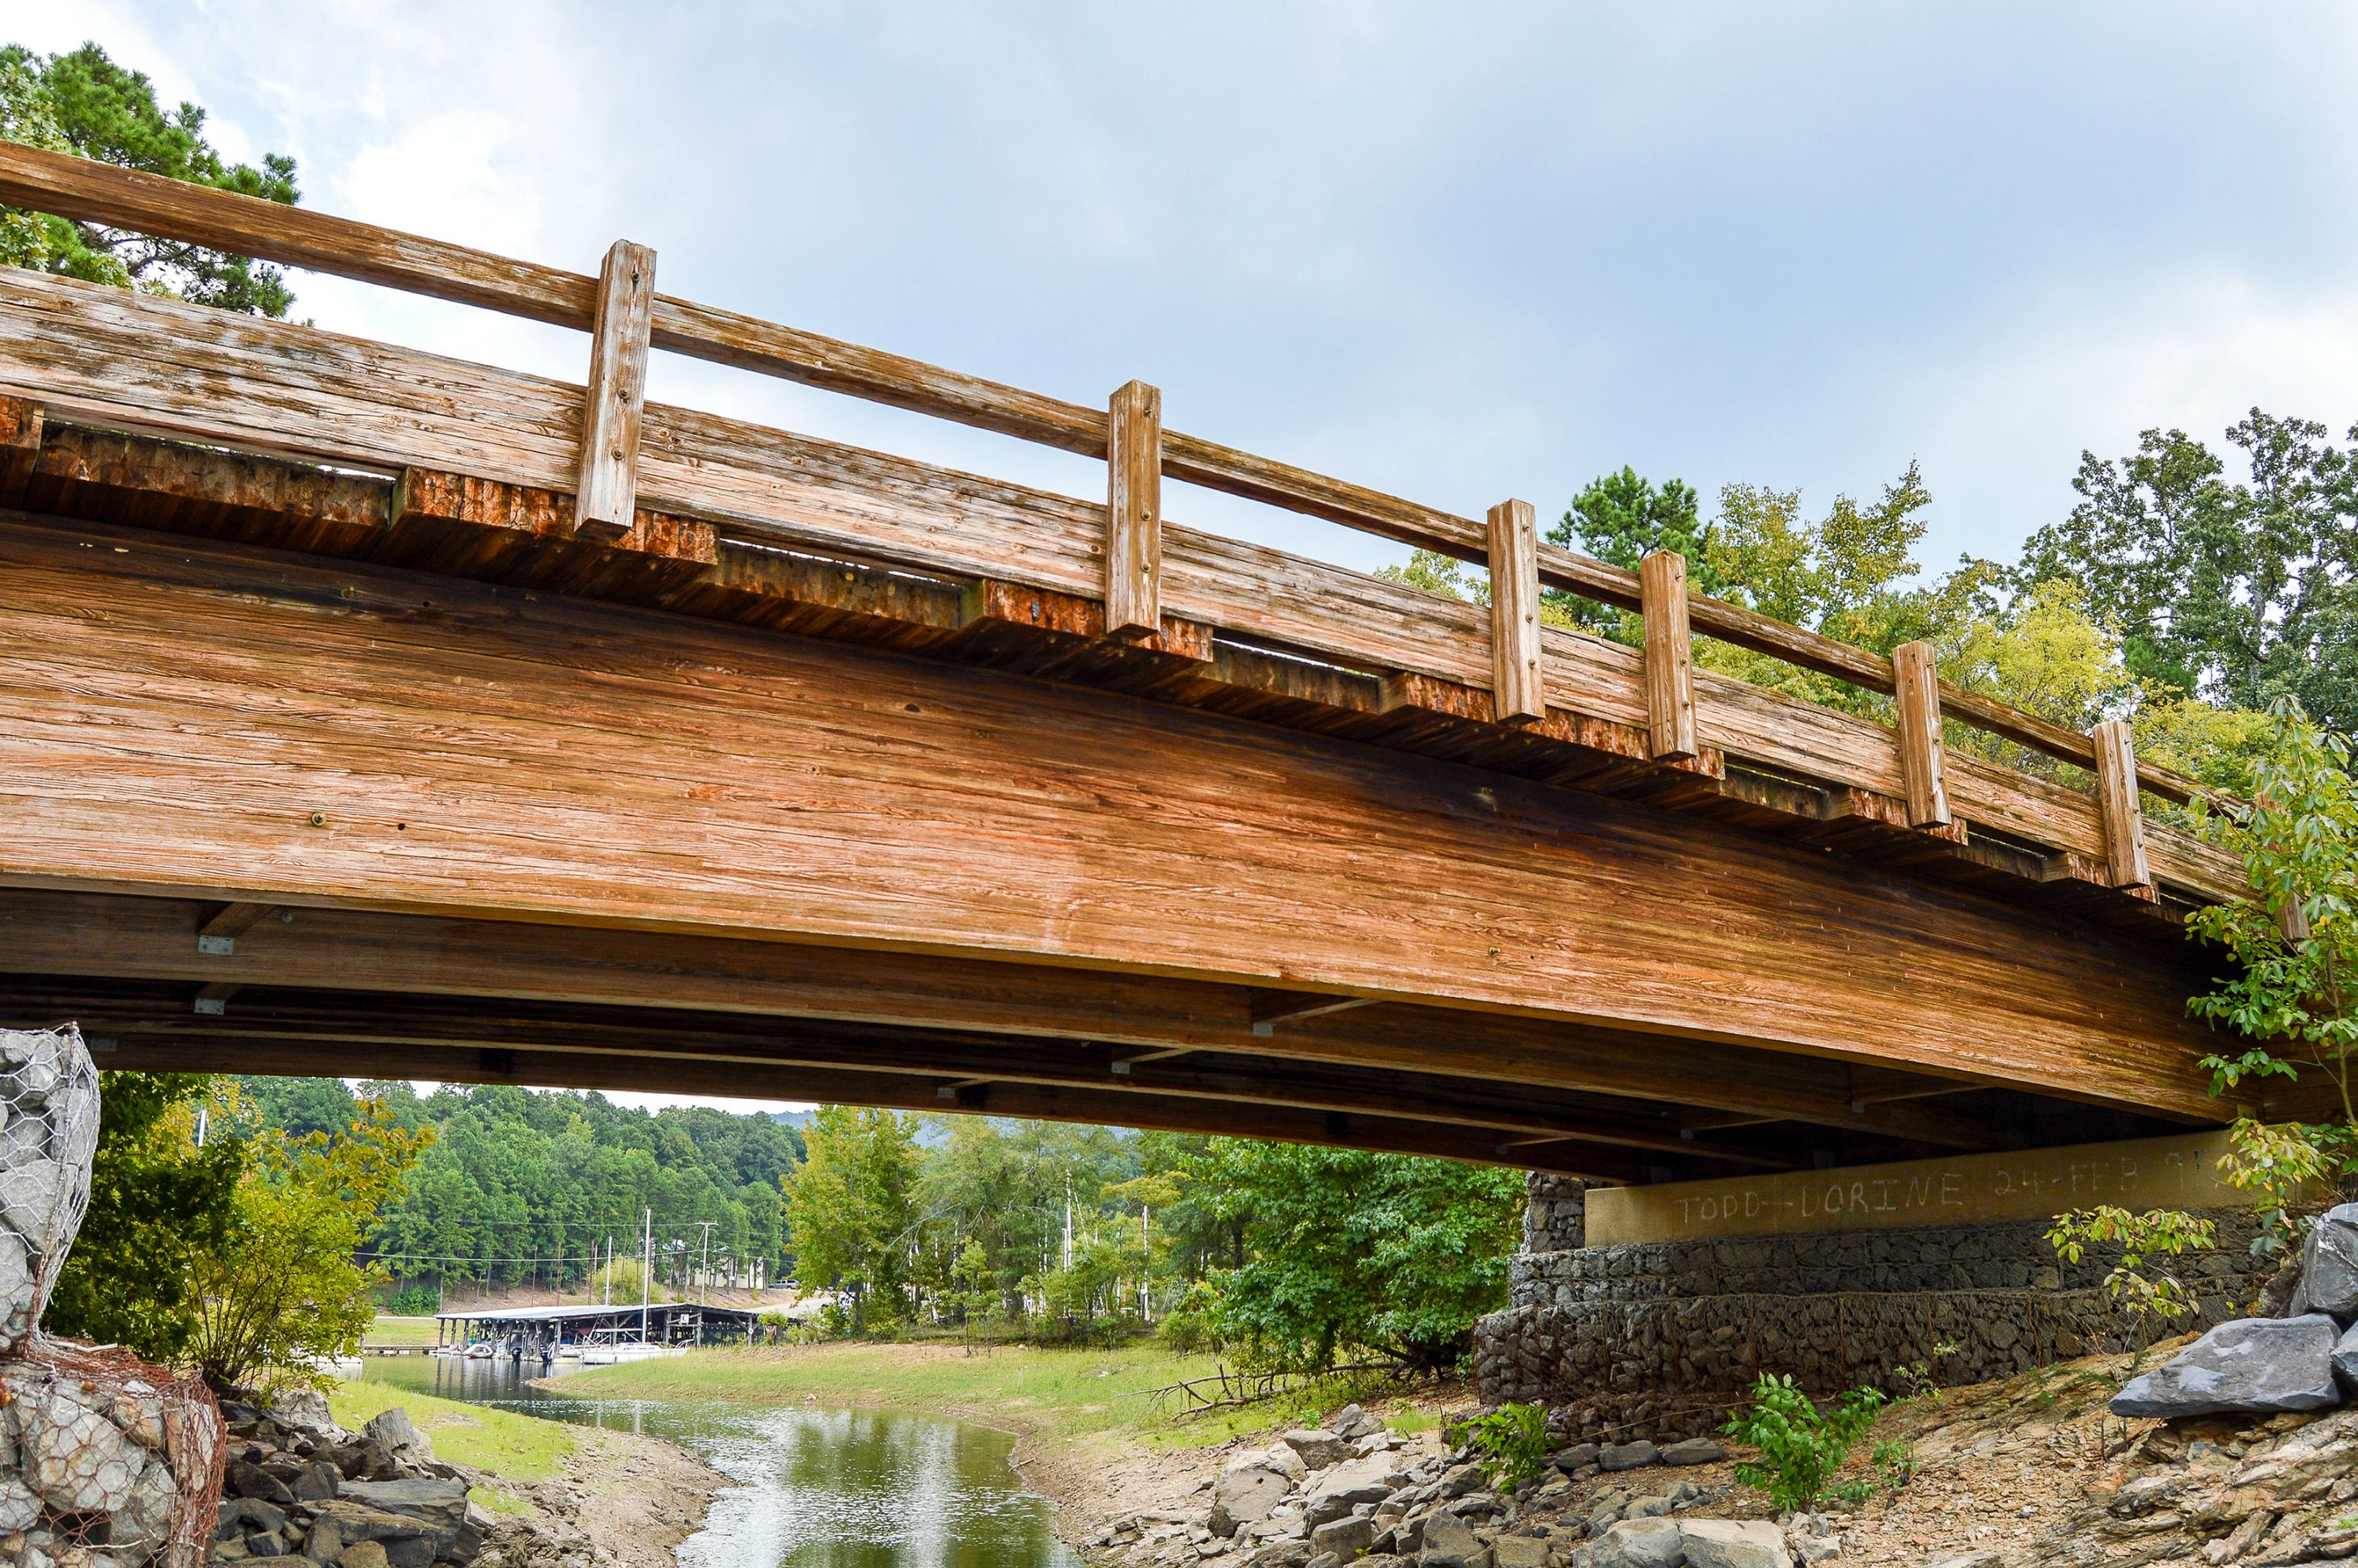 More wooden most wooden. Балочный Автодорожный мост. Деревянный мост. Деревянный мост через реку. Балочный деревянный мост.